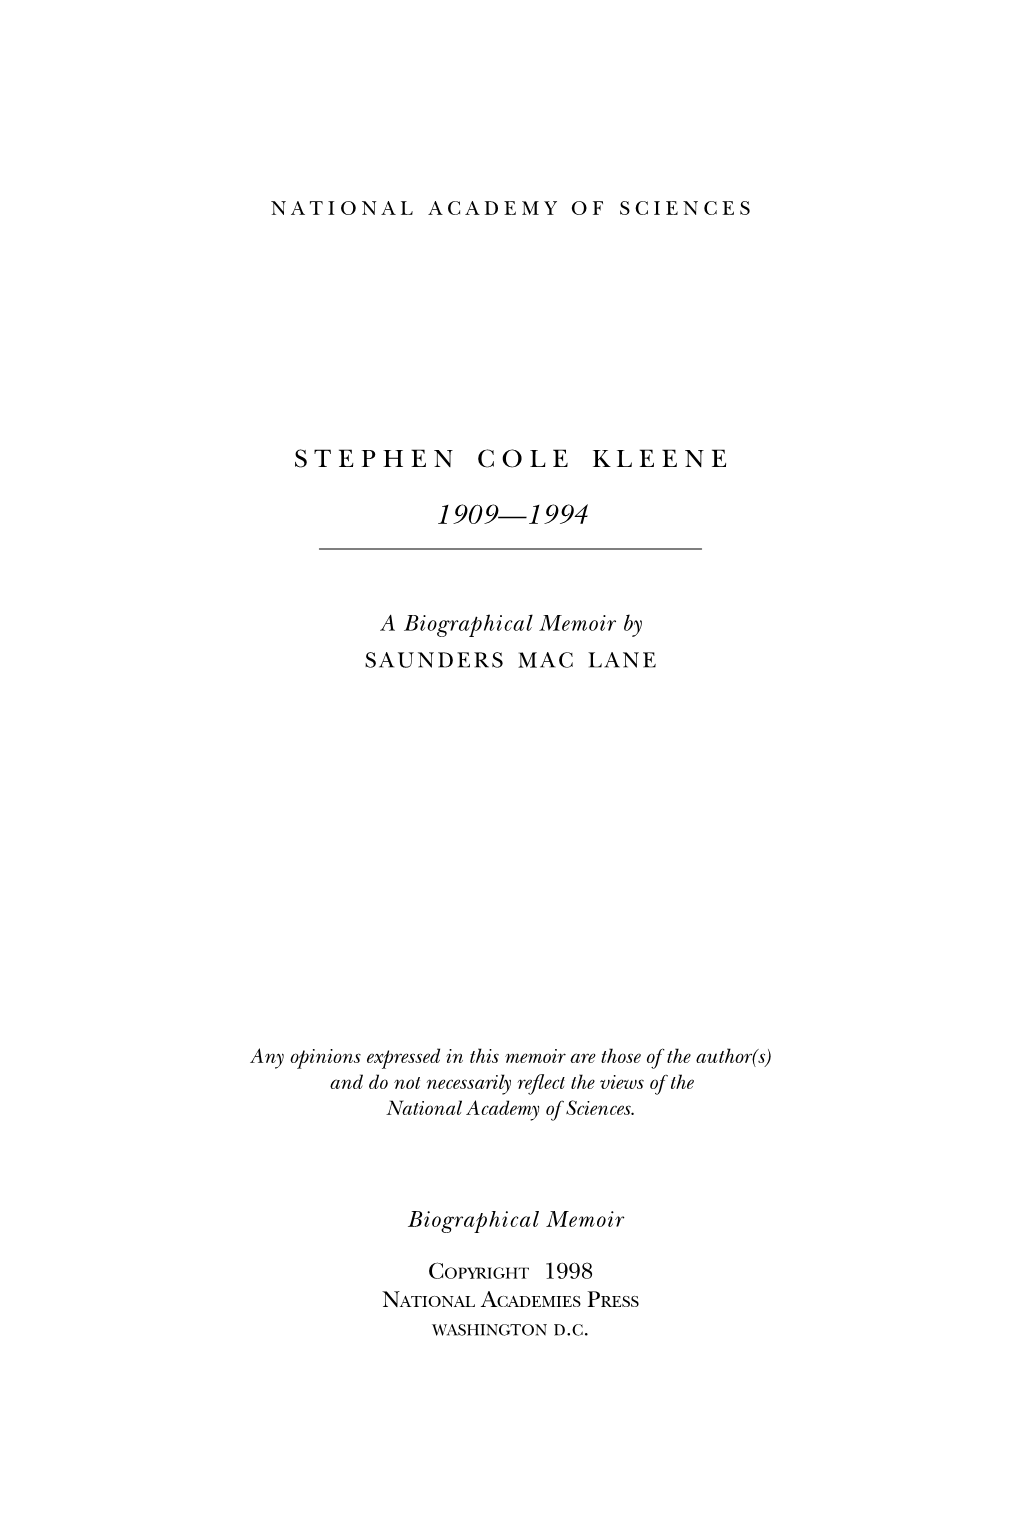 Stephen Cole Kleene Biographical Memoir